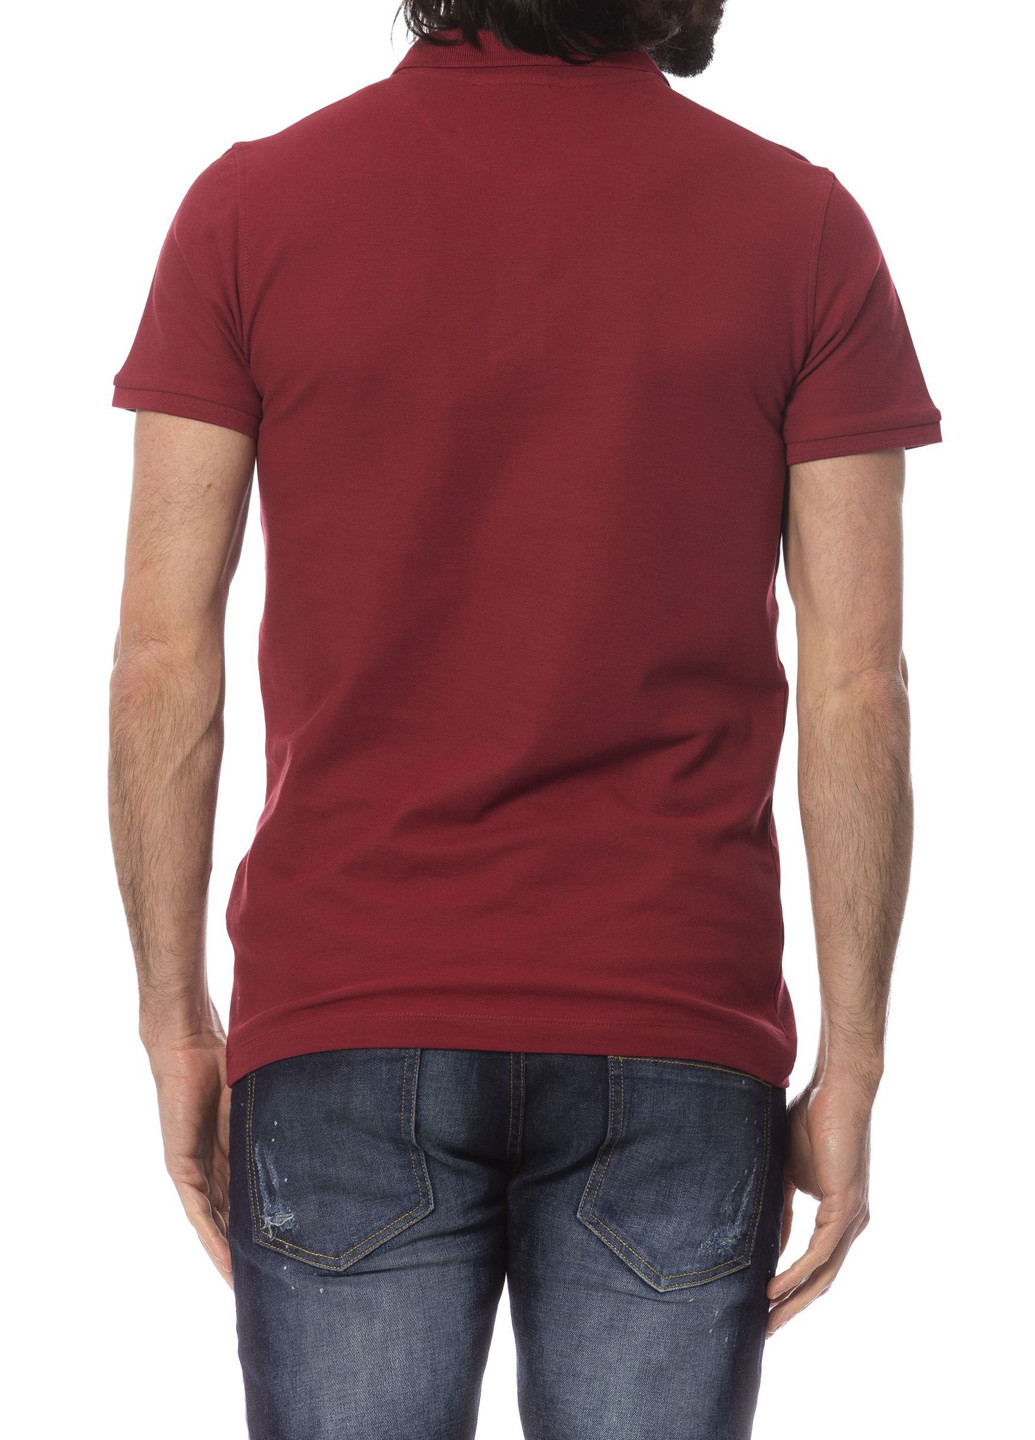 Бордовая футболка-поло для мужчин Richmond с логотипом